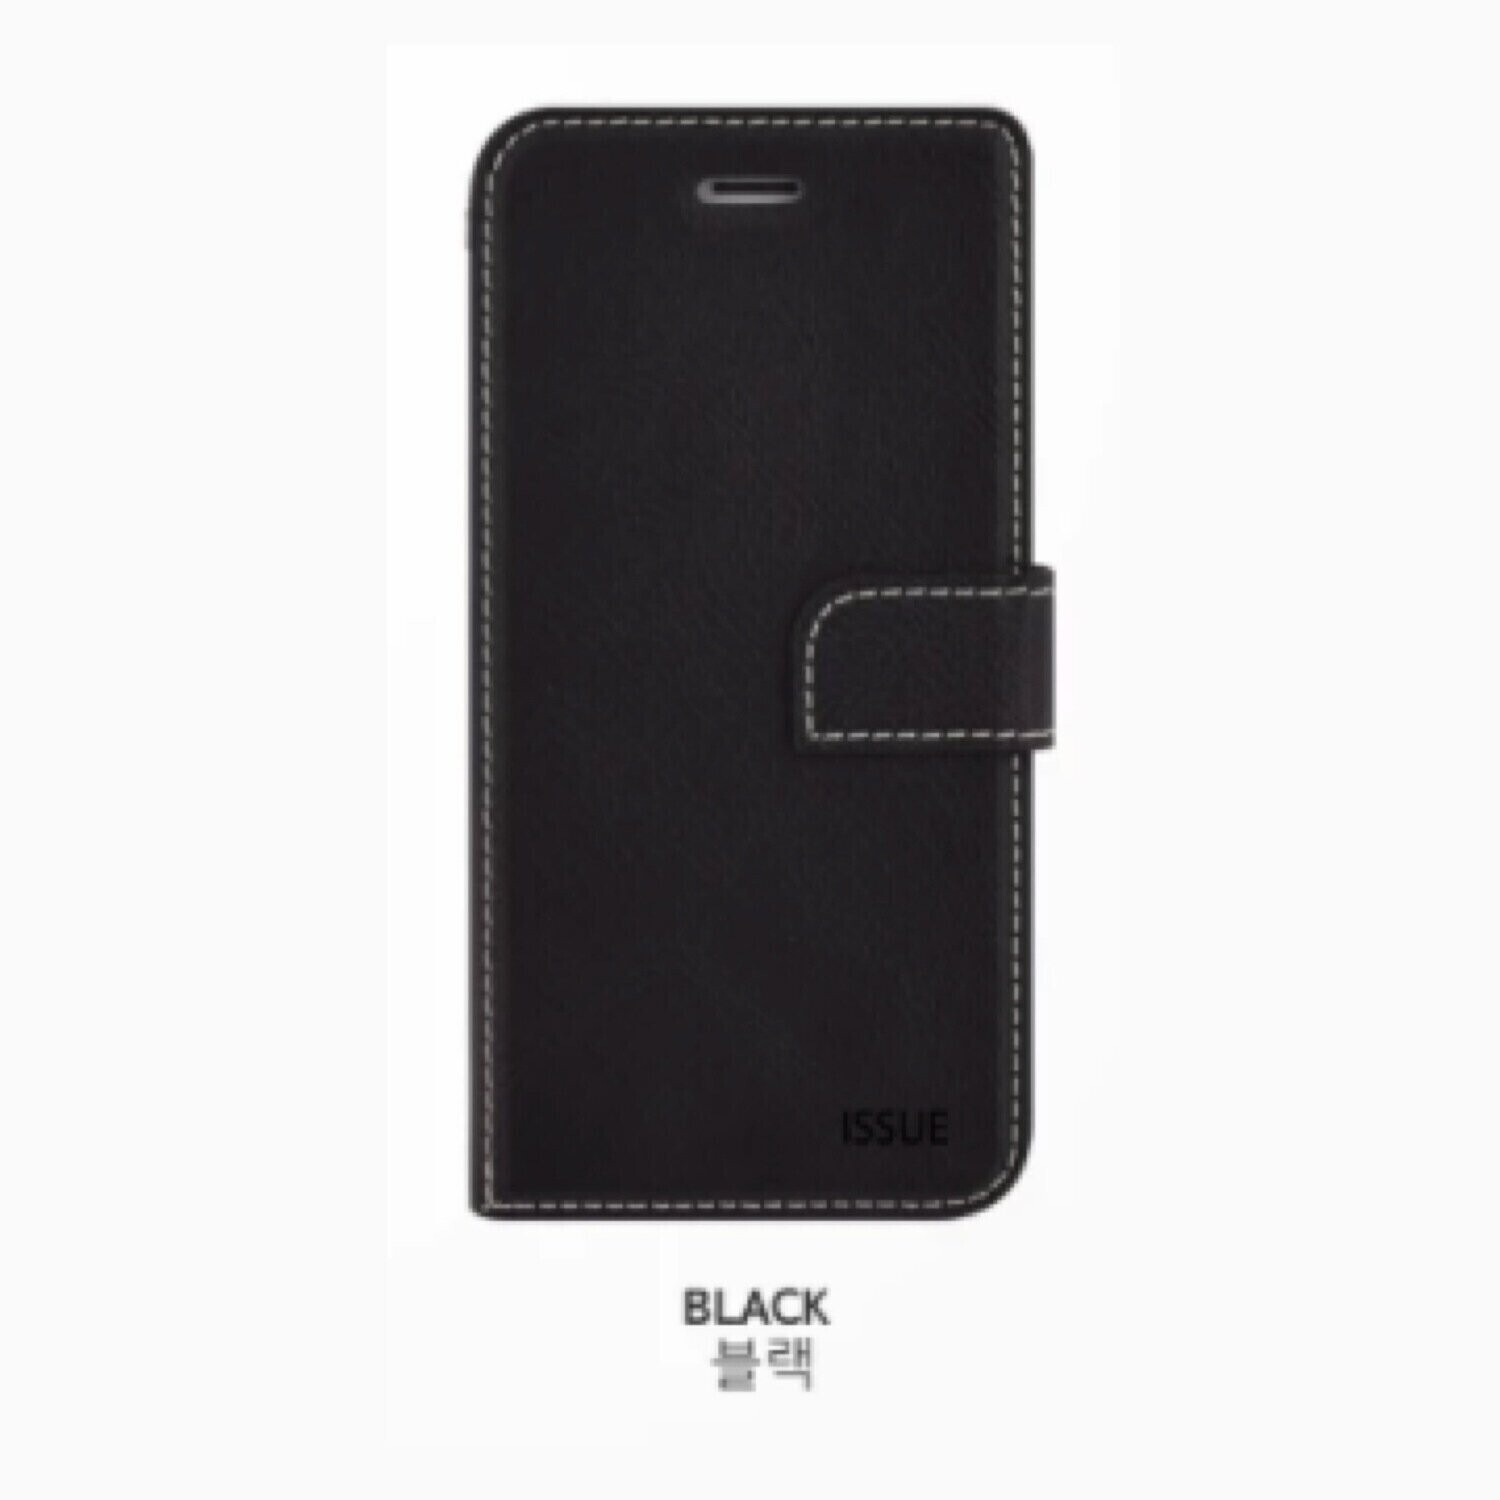 Komass iPhone 12 Pro Max 6.7" Flip Case, Black